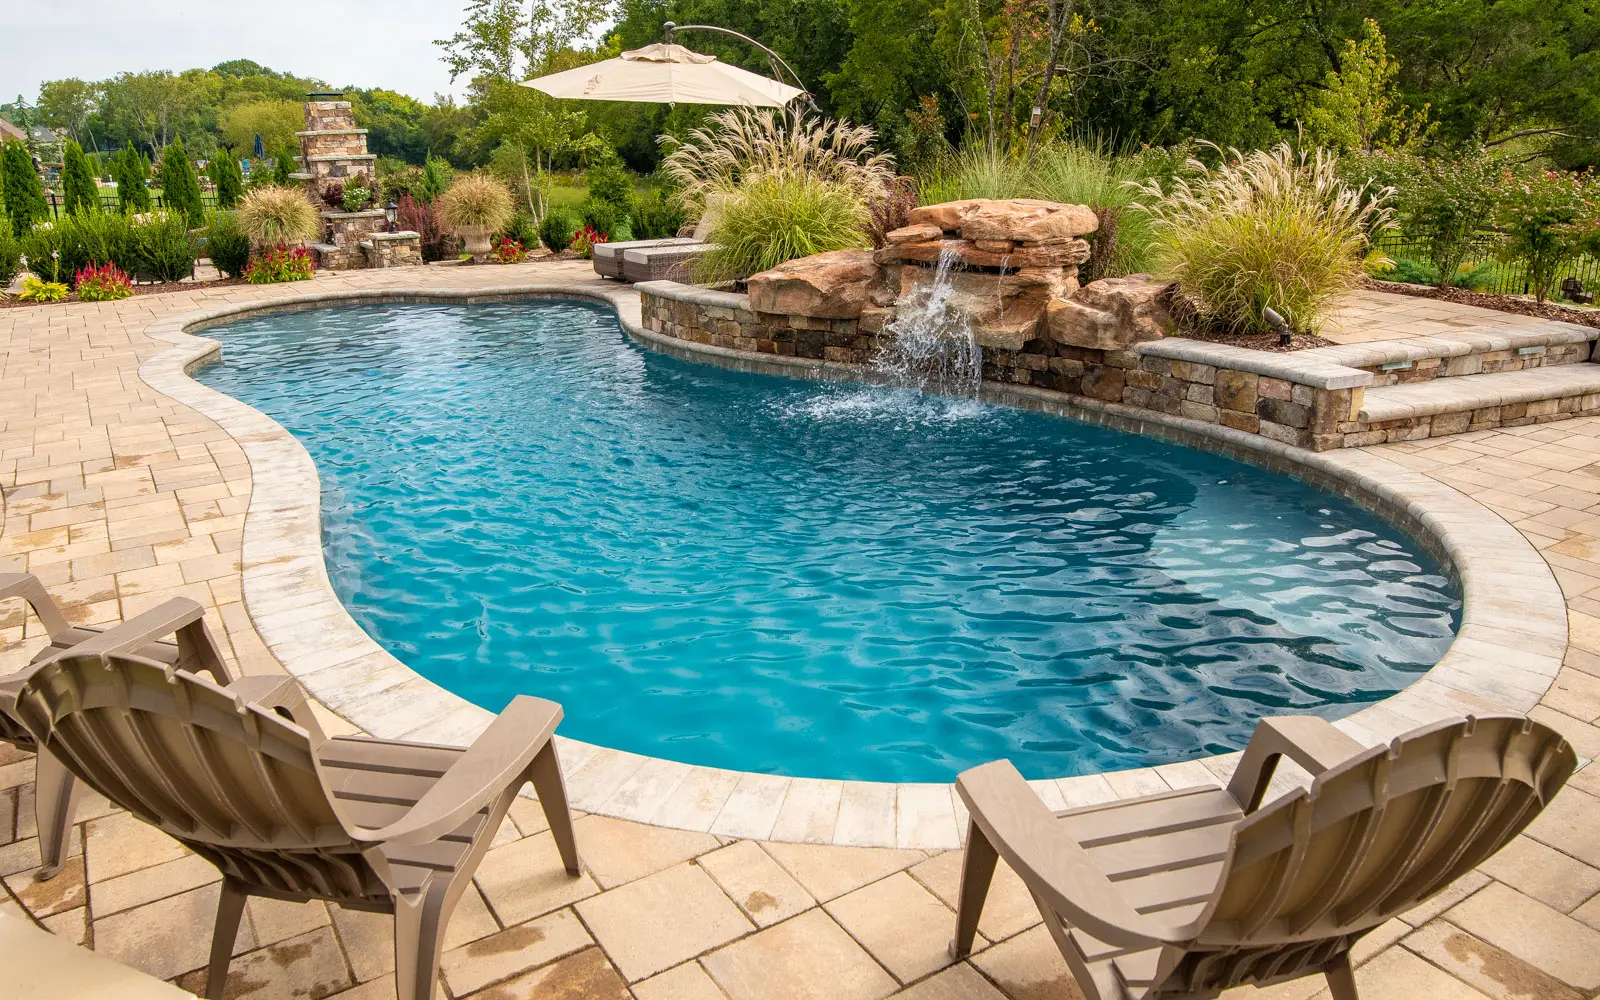 Northern Colorado Pools: fiberglass pool builders for Colorado & Wyoming